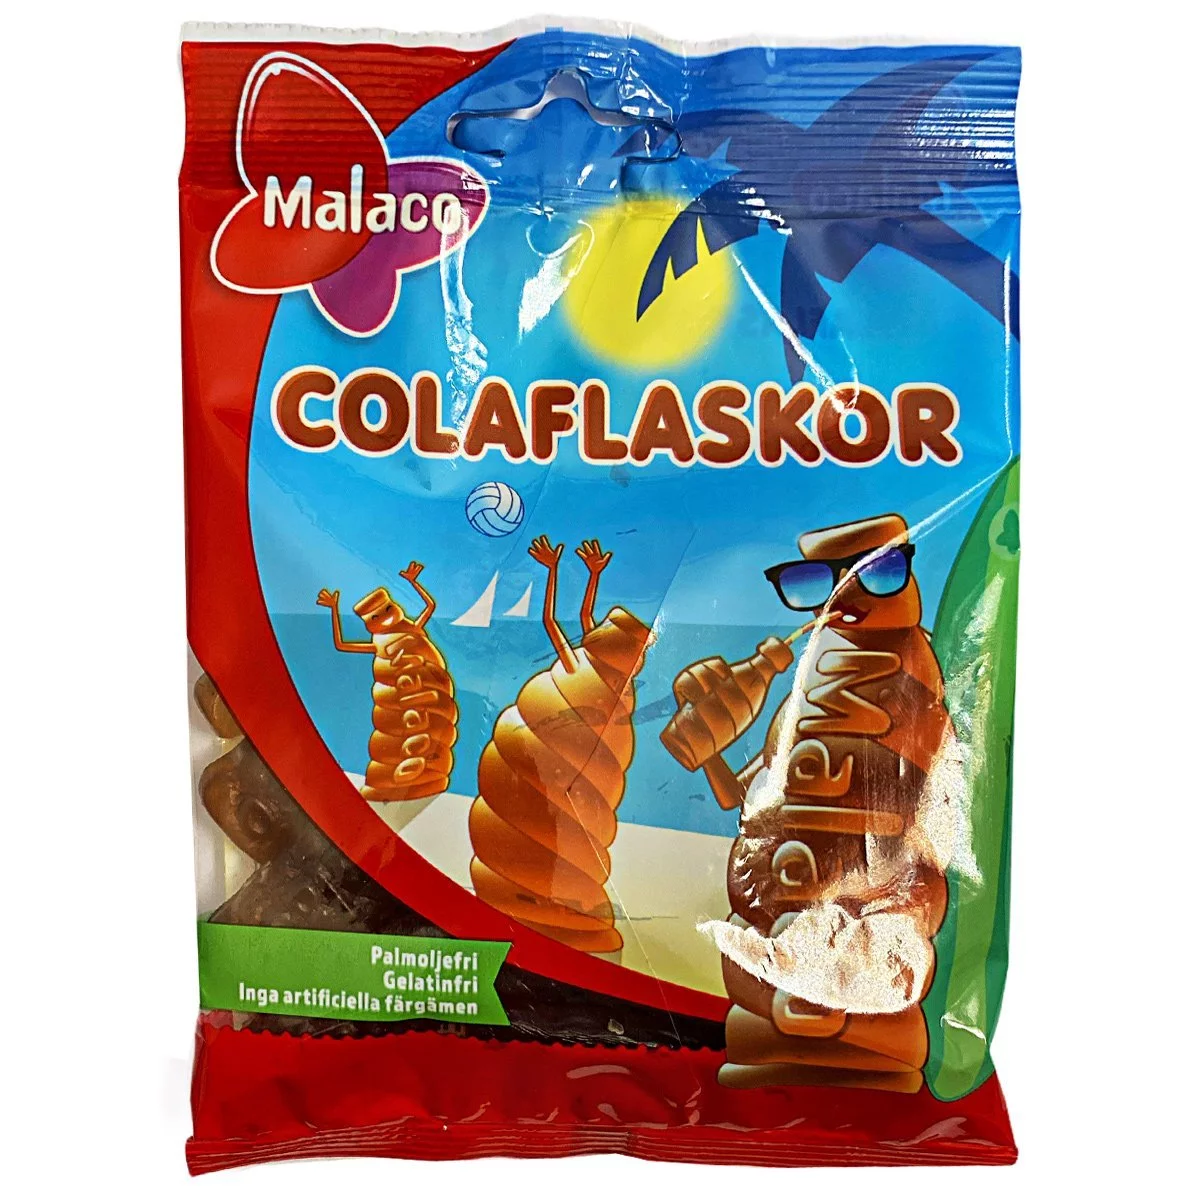 Malaco Colaflaskor - Colaflaschen (80g) 1